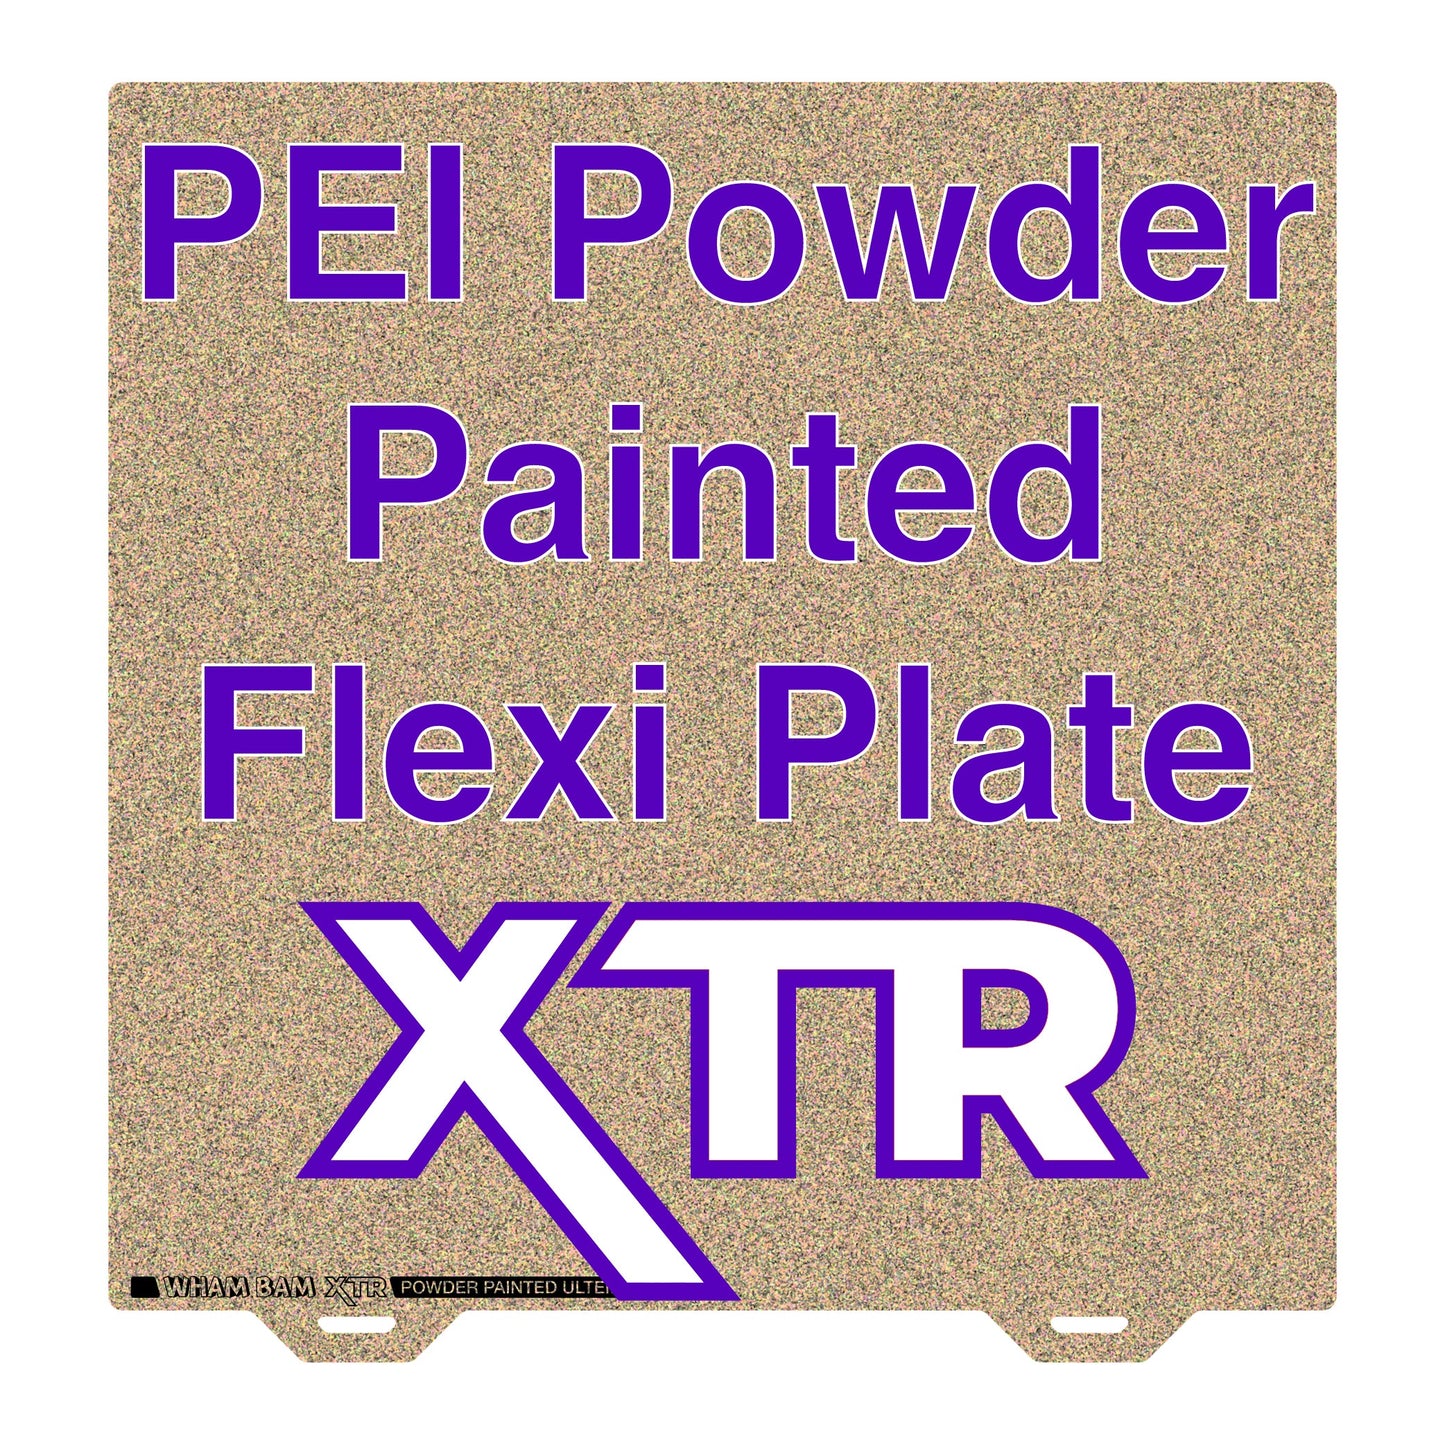 XTR Powder Painted PEI Flexi Plate - 305 x 305 - Voron 2.4 300 and Voron Trident 300